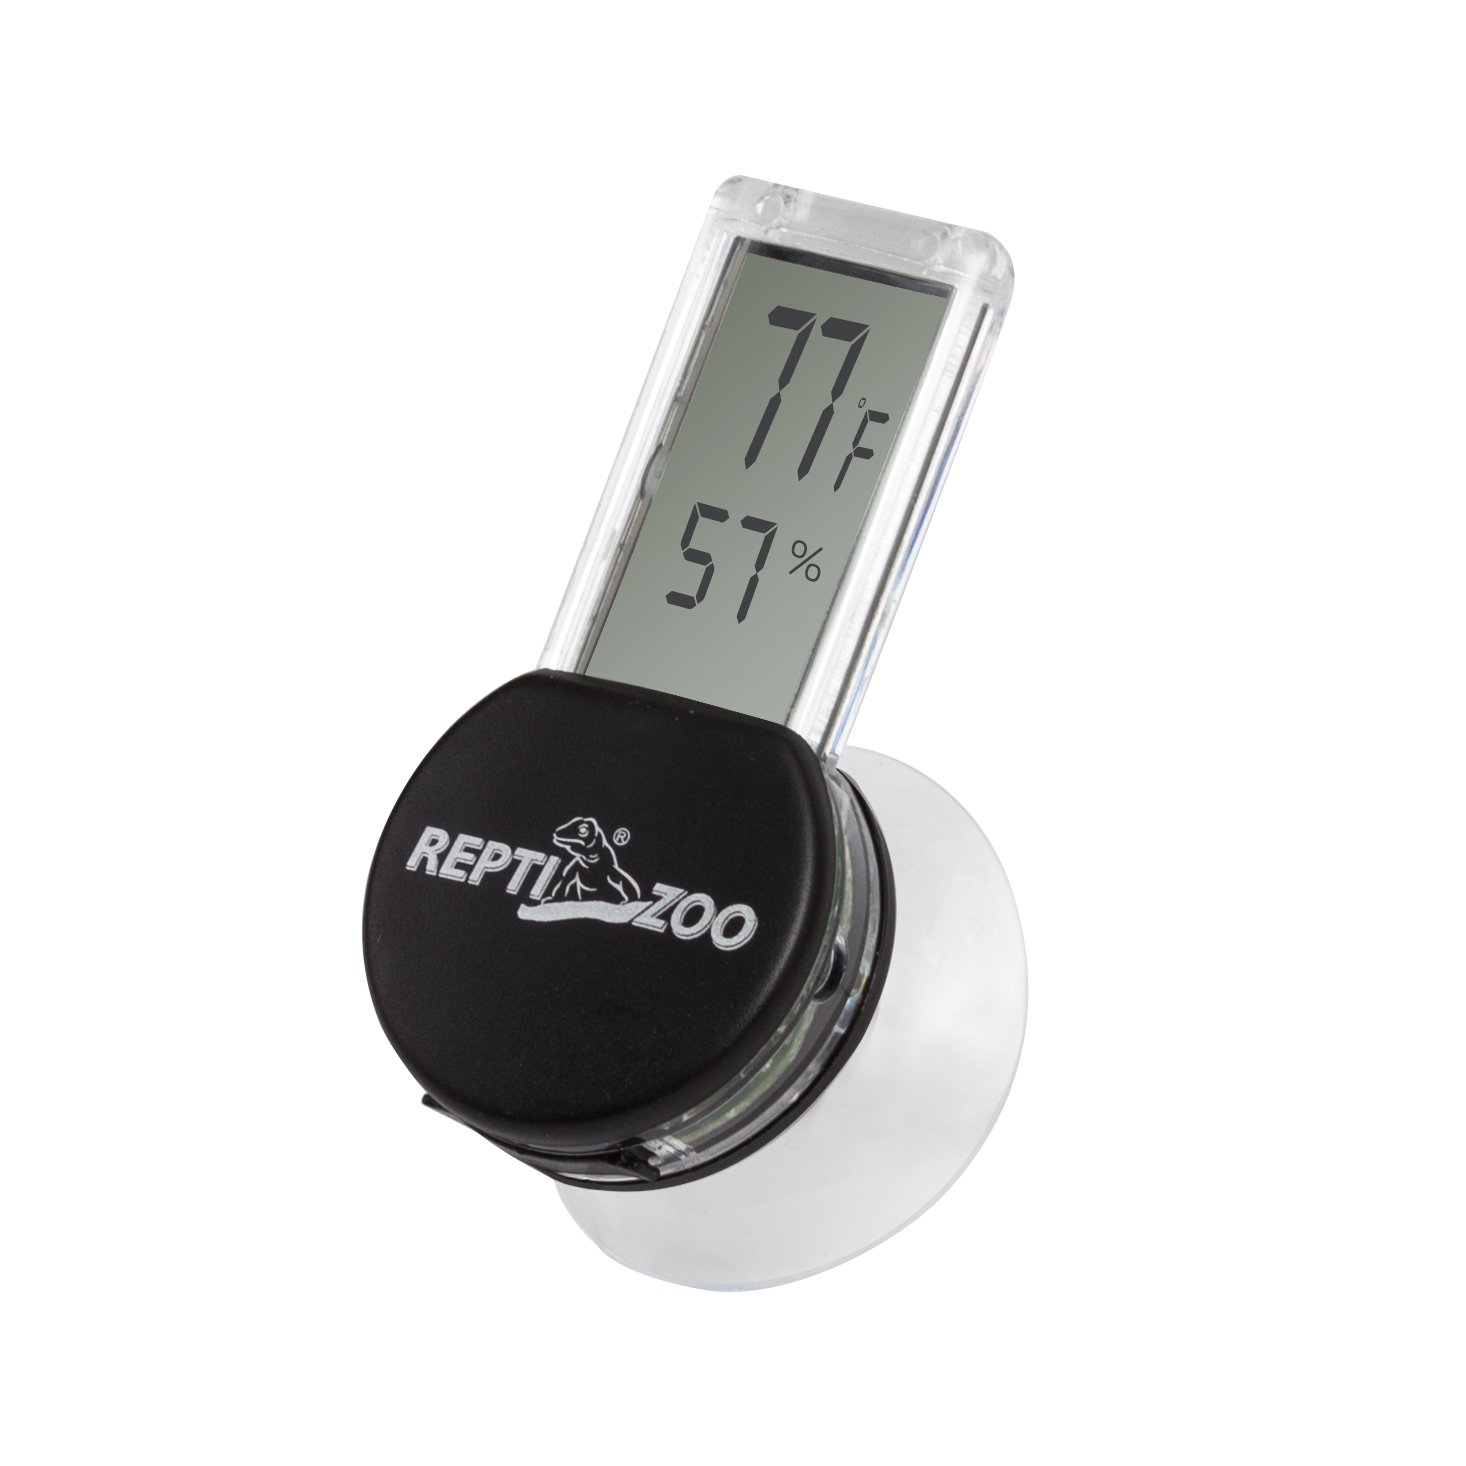 capetsma Mini Hygrometer Reptile Thermometer Digital LCD Monitor Reptile  Thermostat Humidity Meter Gauge Reptile Supplies Humidifier for Terrarium